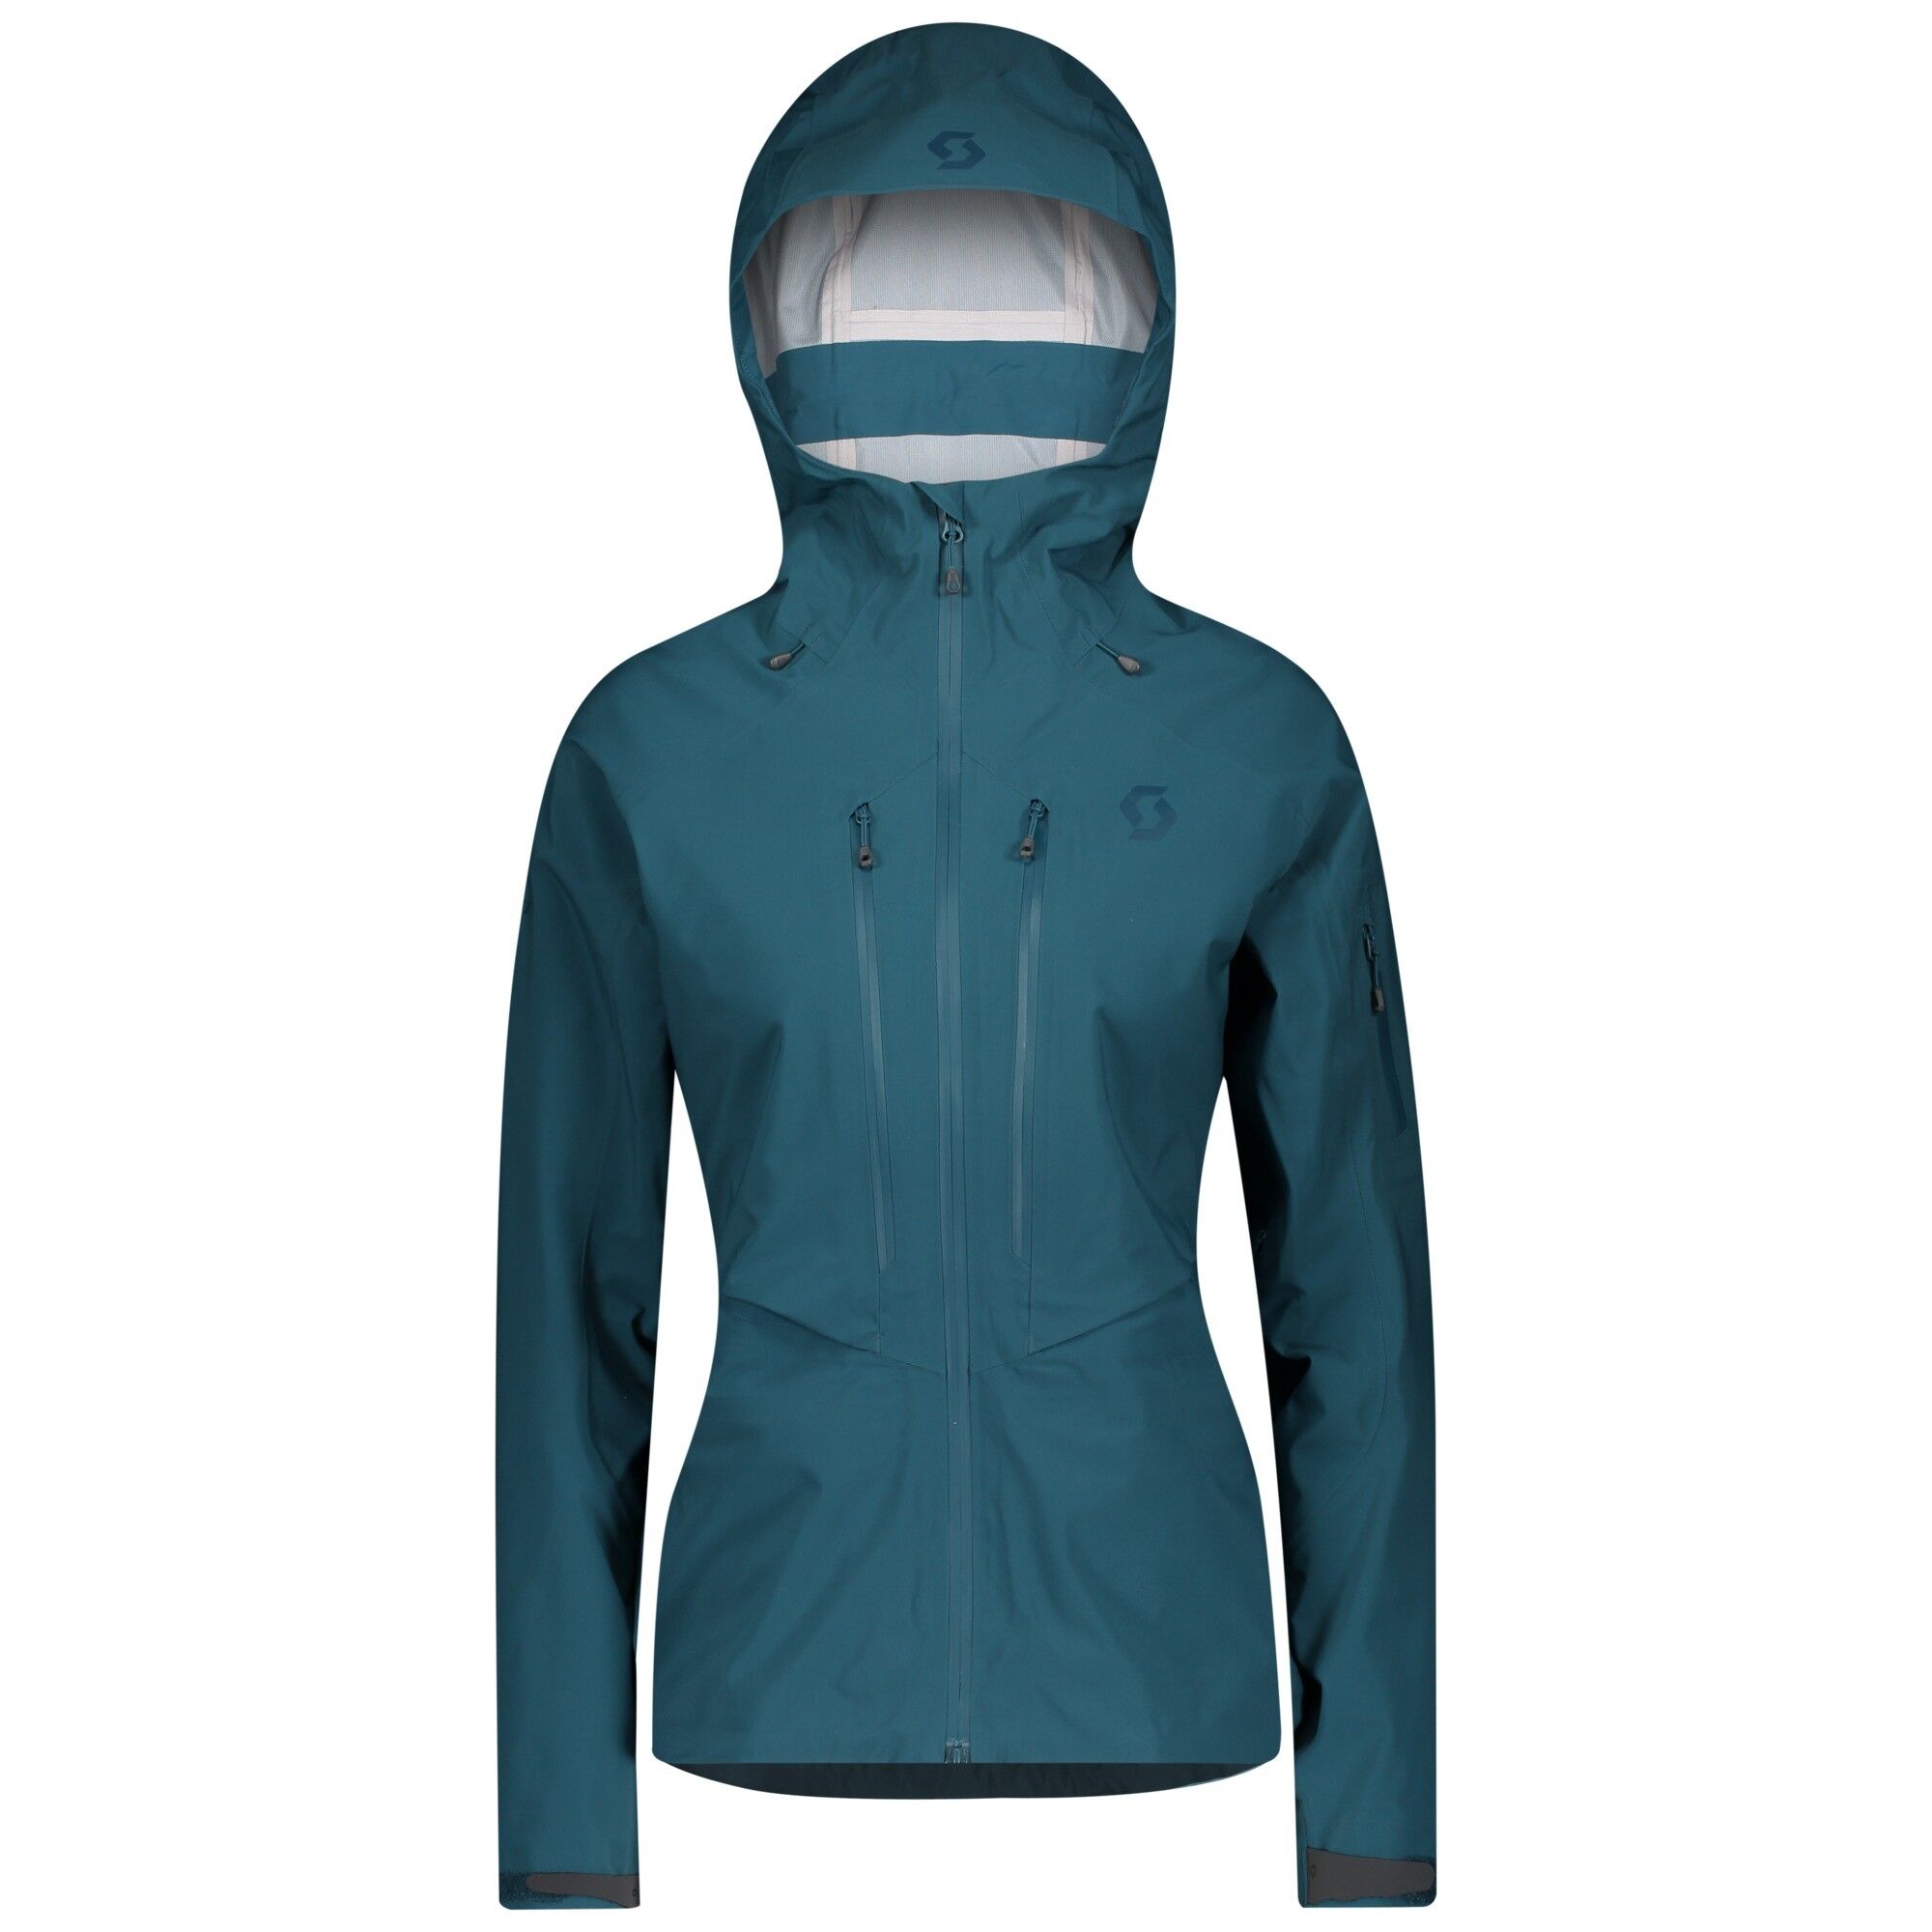 Scott Explorair DRX 3L Jacket - Ski jacket - Women's